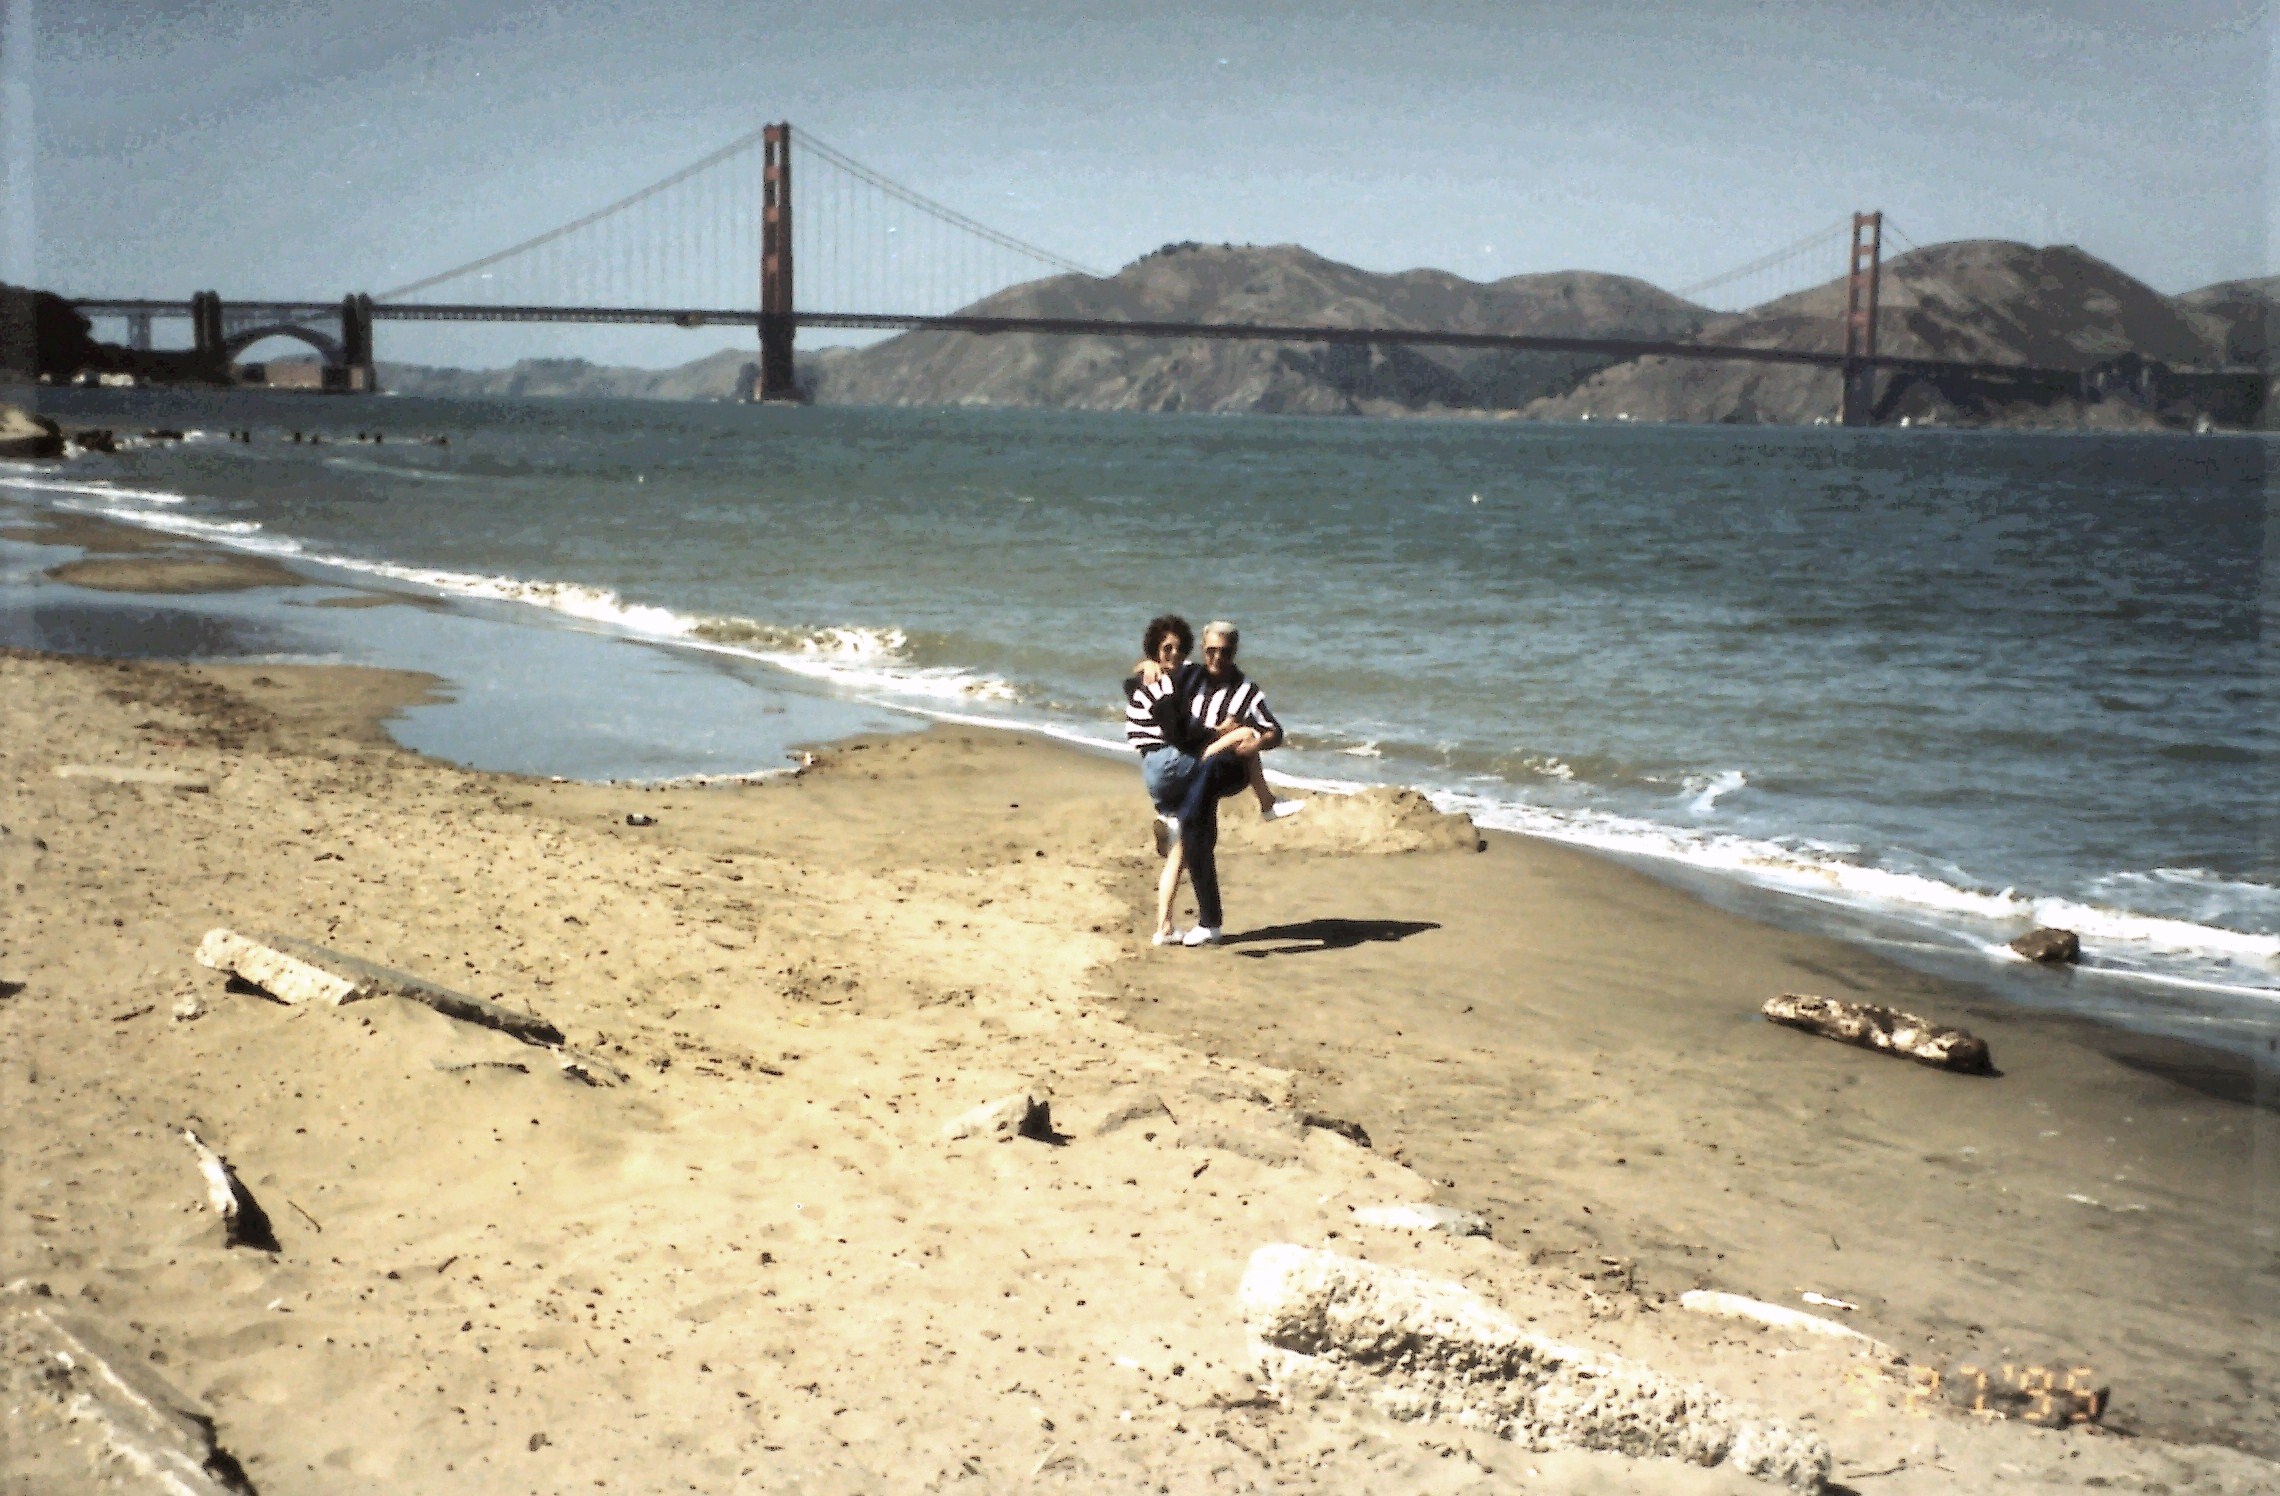 1995 SF trip<br />
Richard and Kathy San Francisco Bay beach Golden Gate Bridge background